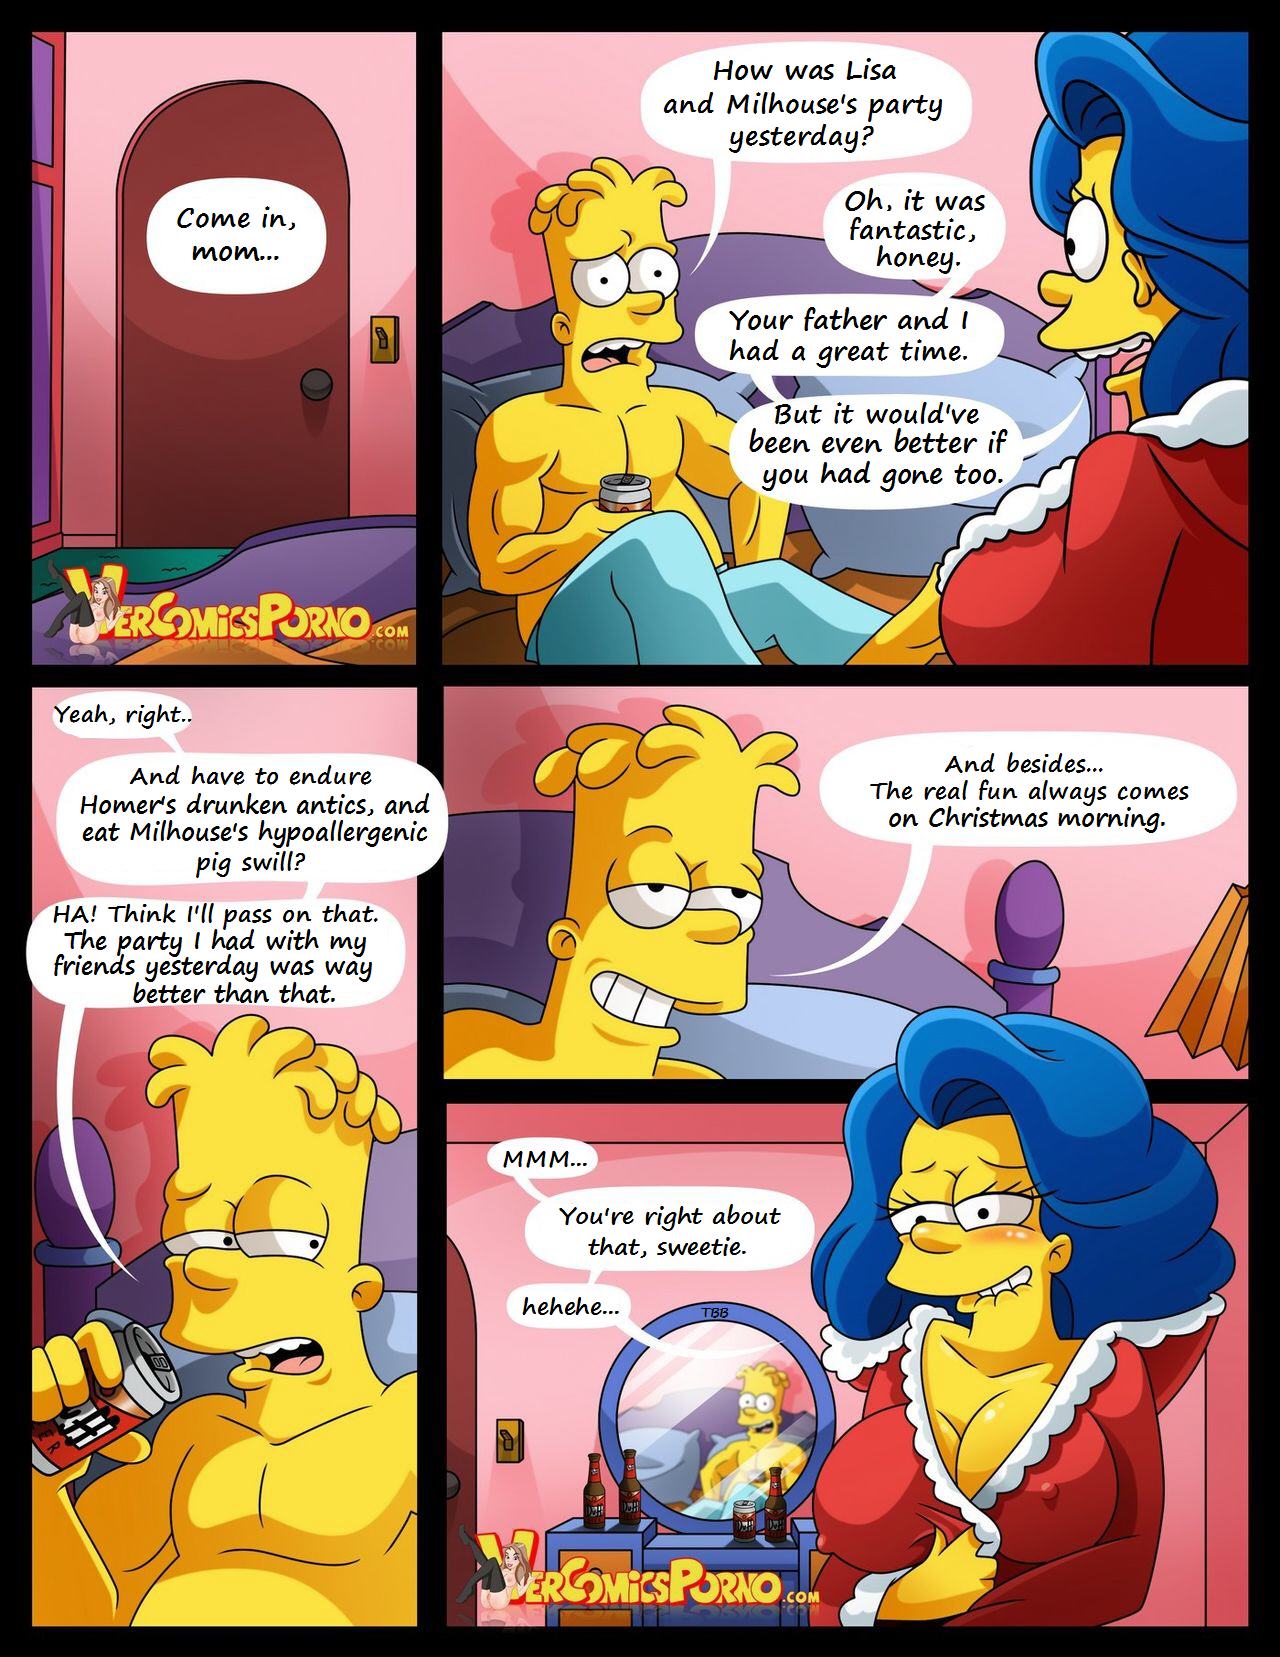 The simpsons porno comic